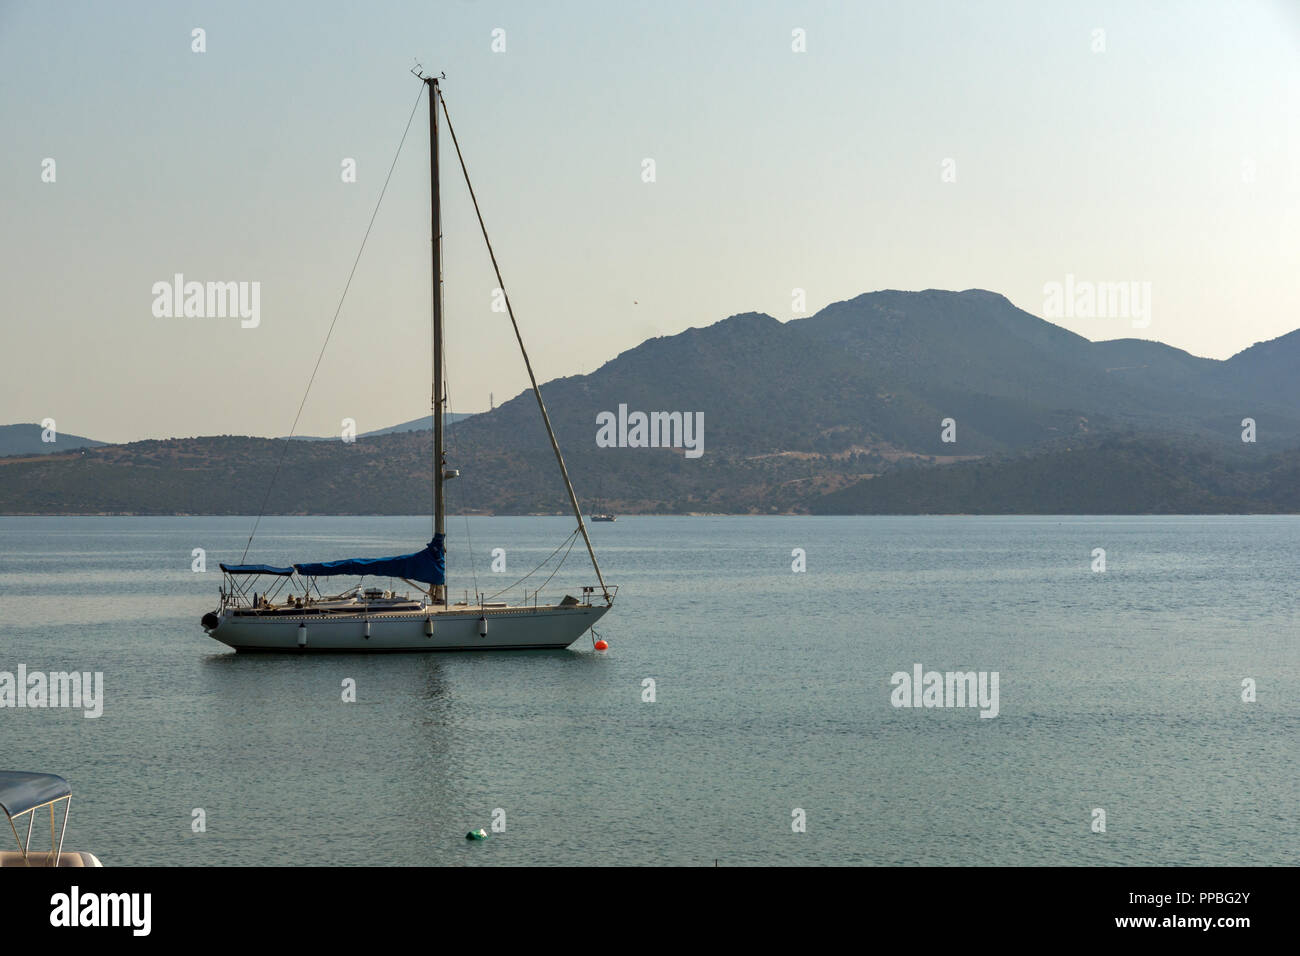 NYDRI, LEFKADA, GREECE JULY 17: Port at Nydri Bay, Lefkada, Ionian ...